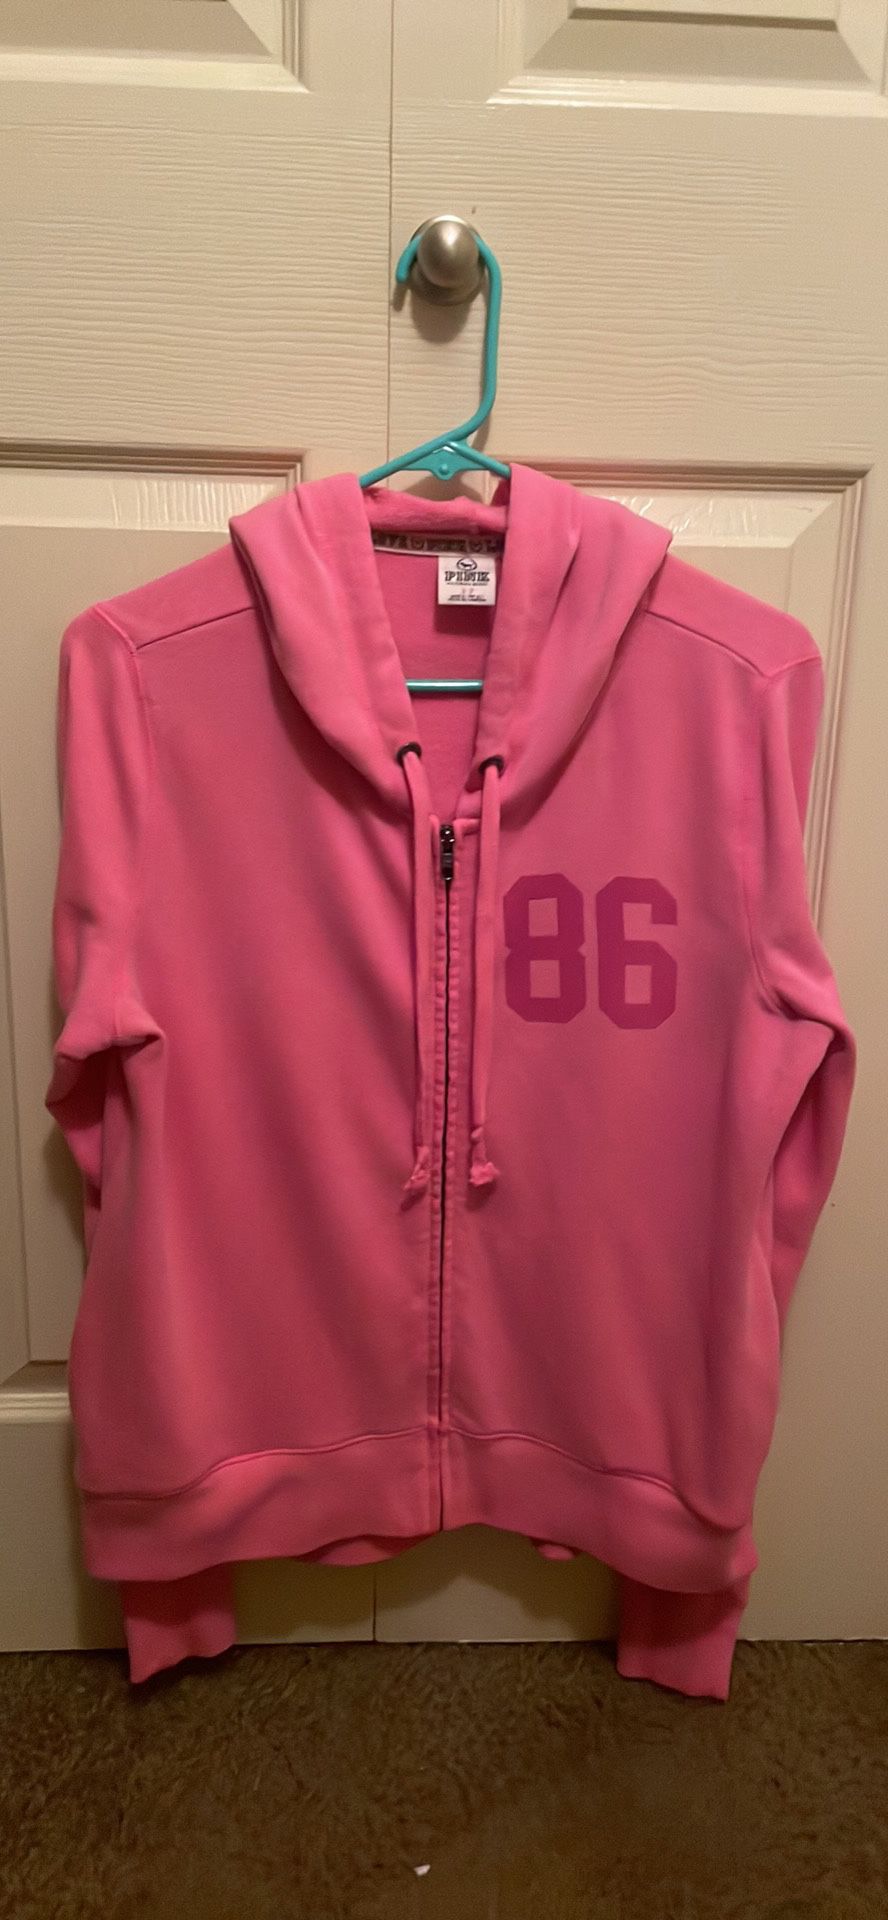 Victoria’s Secret Pink 86 Sweater (Size: S)